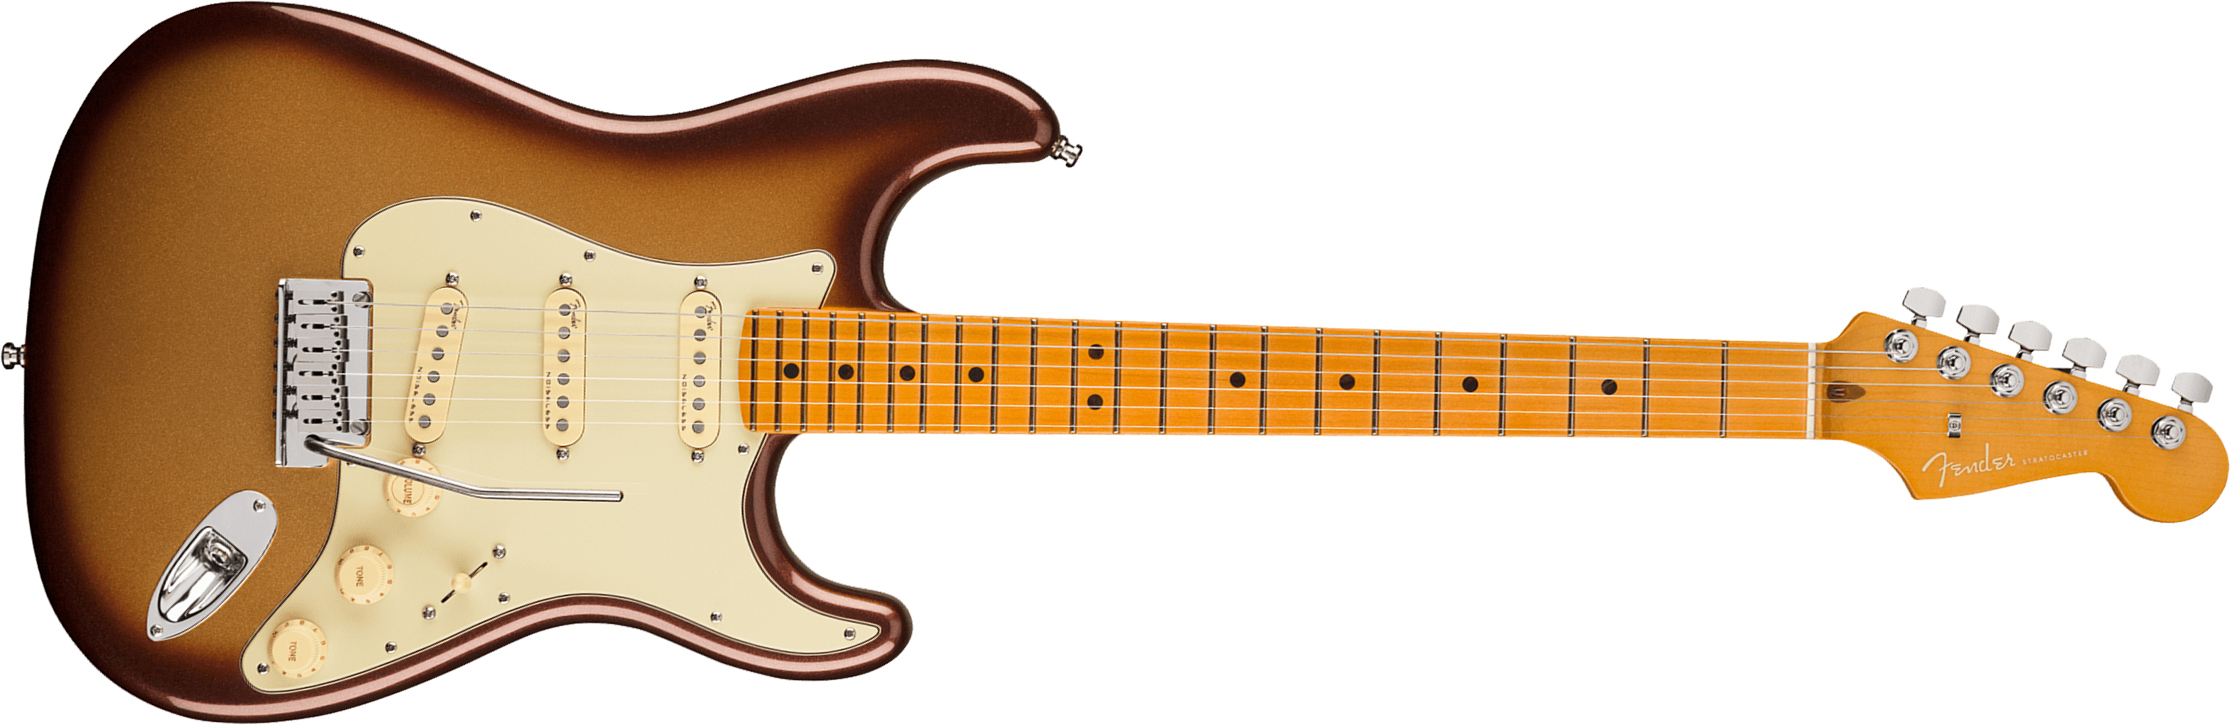 Fender Strat American Ultra 2019 Usa Mn - Mocha Burst - Elektrische gitaar in Str-vorm - Main picture